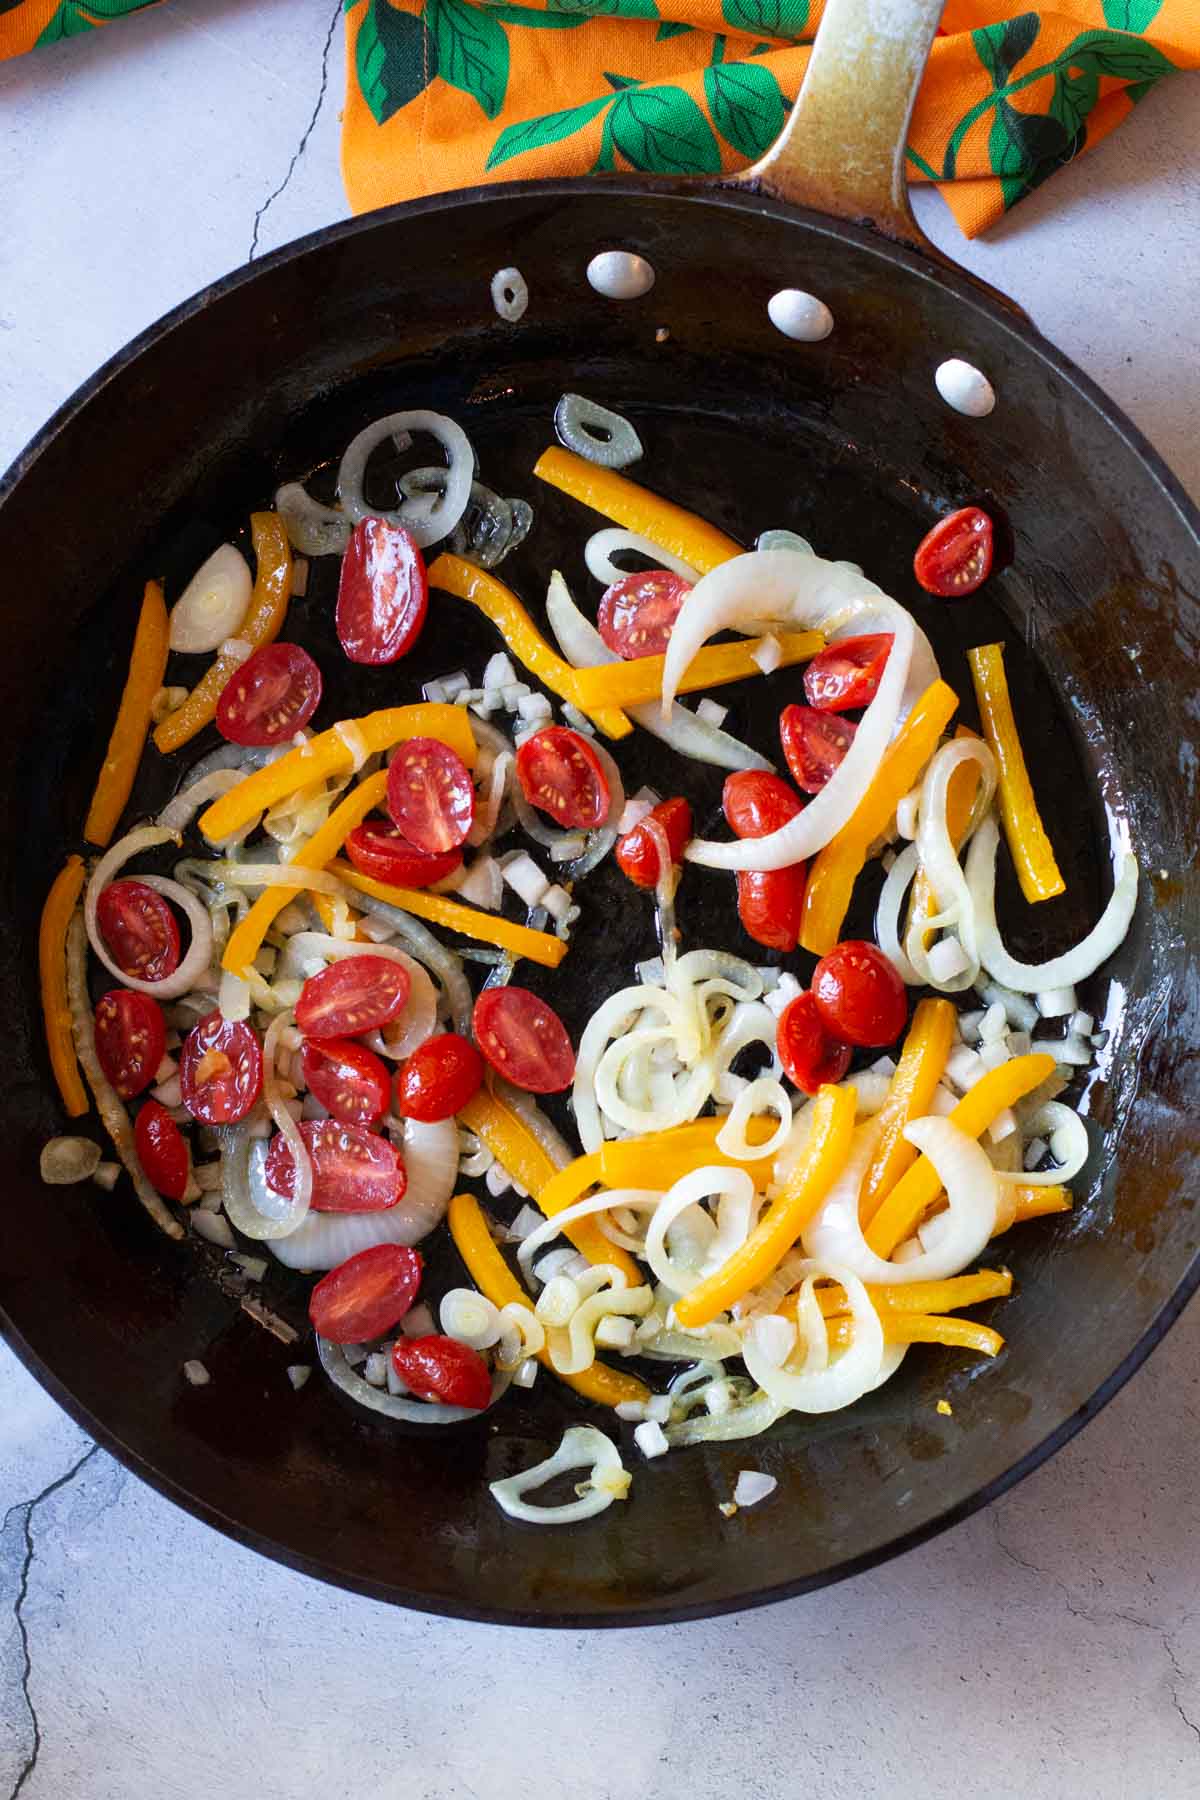 Adding tomatoes to vegetables to make salmon pasta.